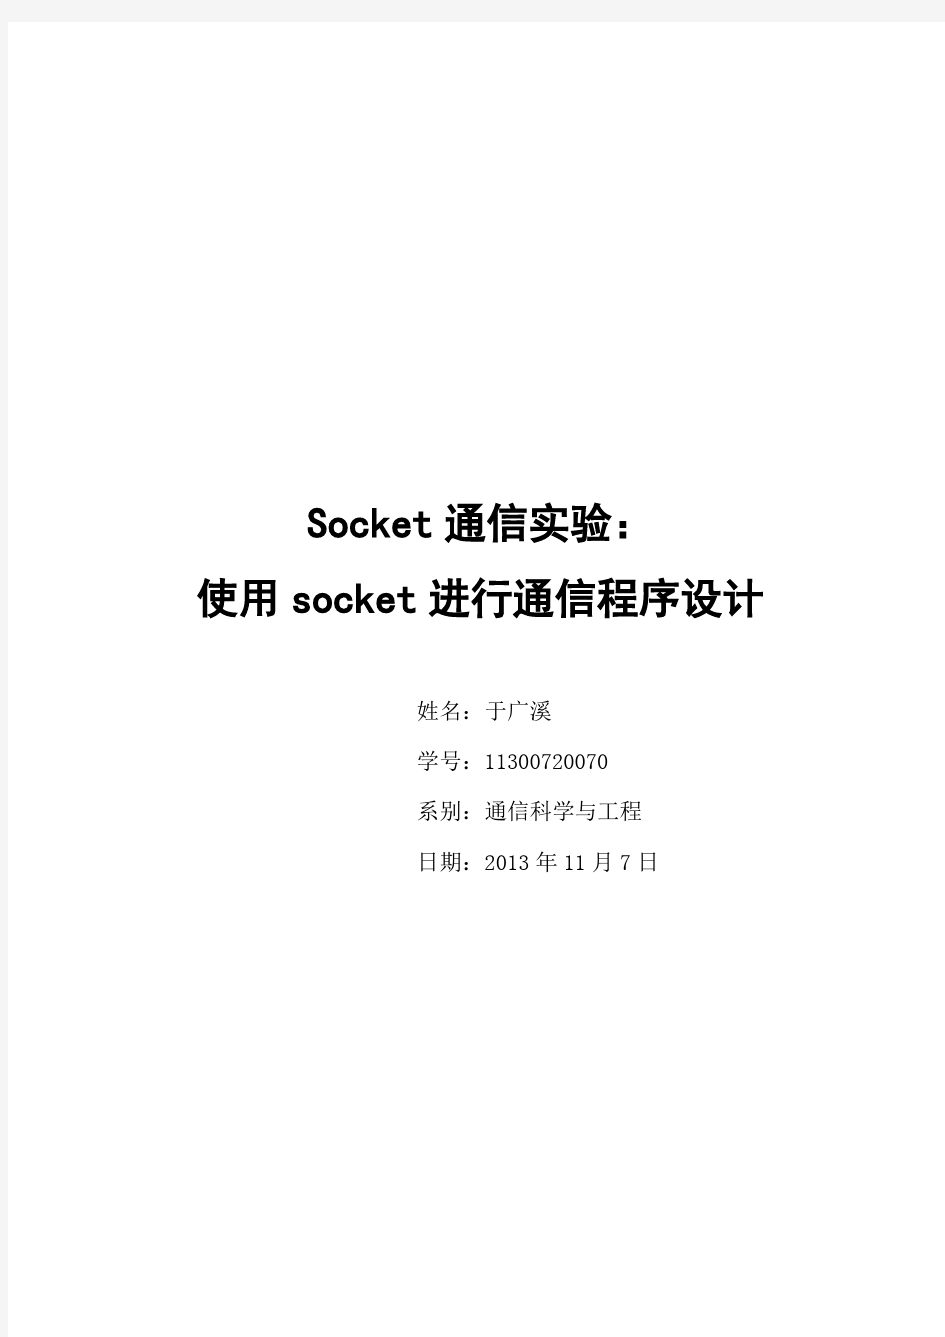 Socket通信实验报告